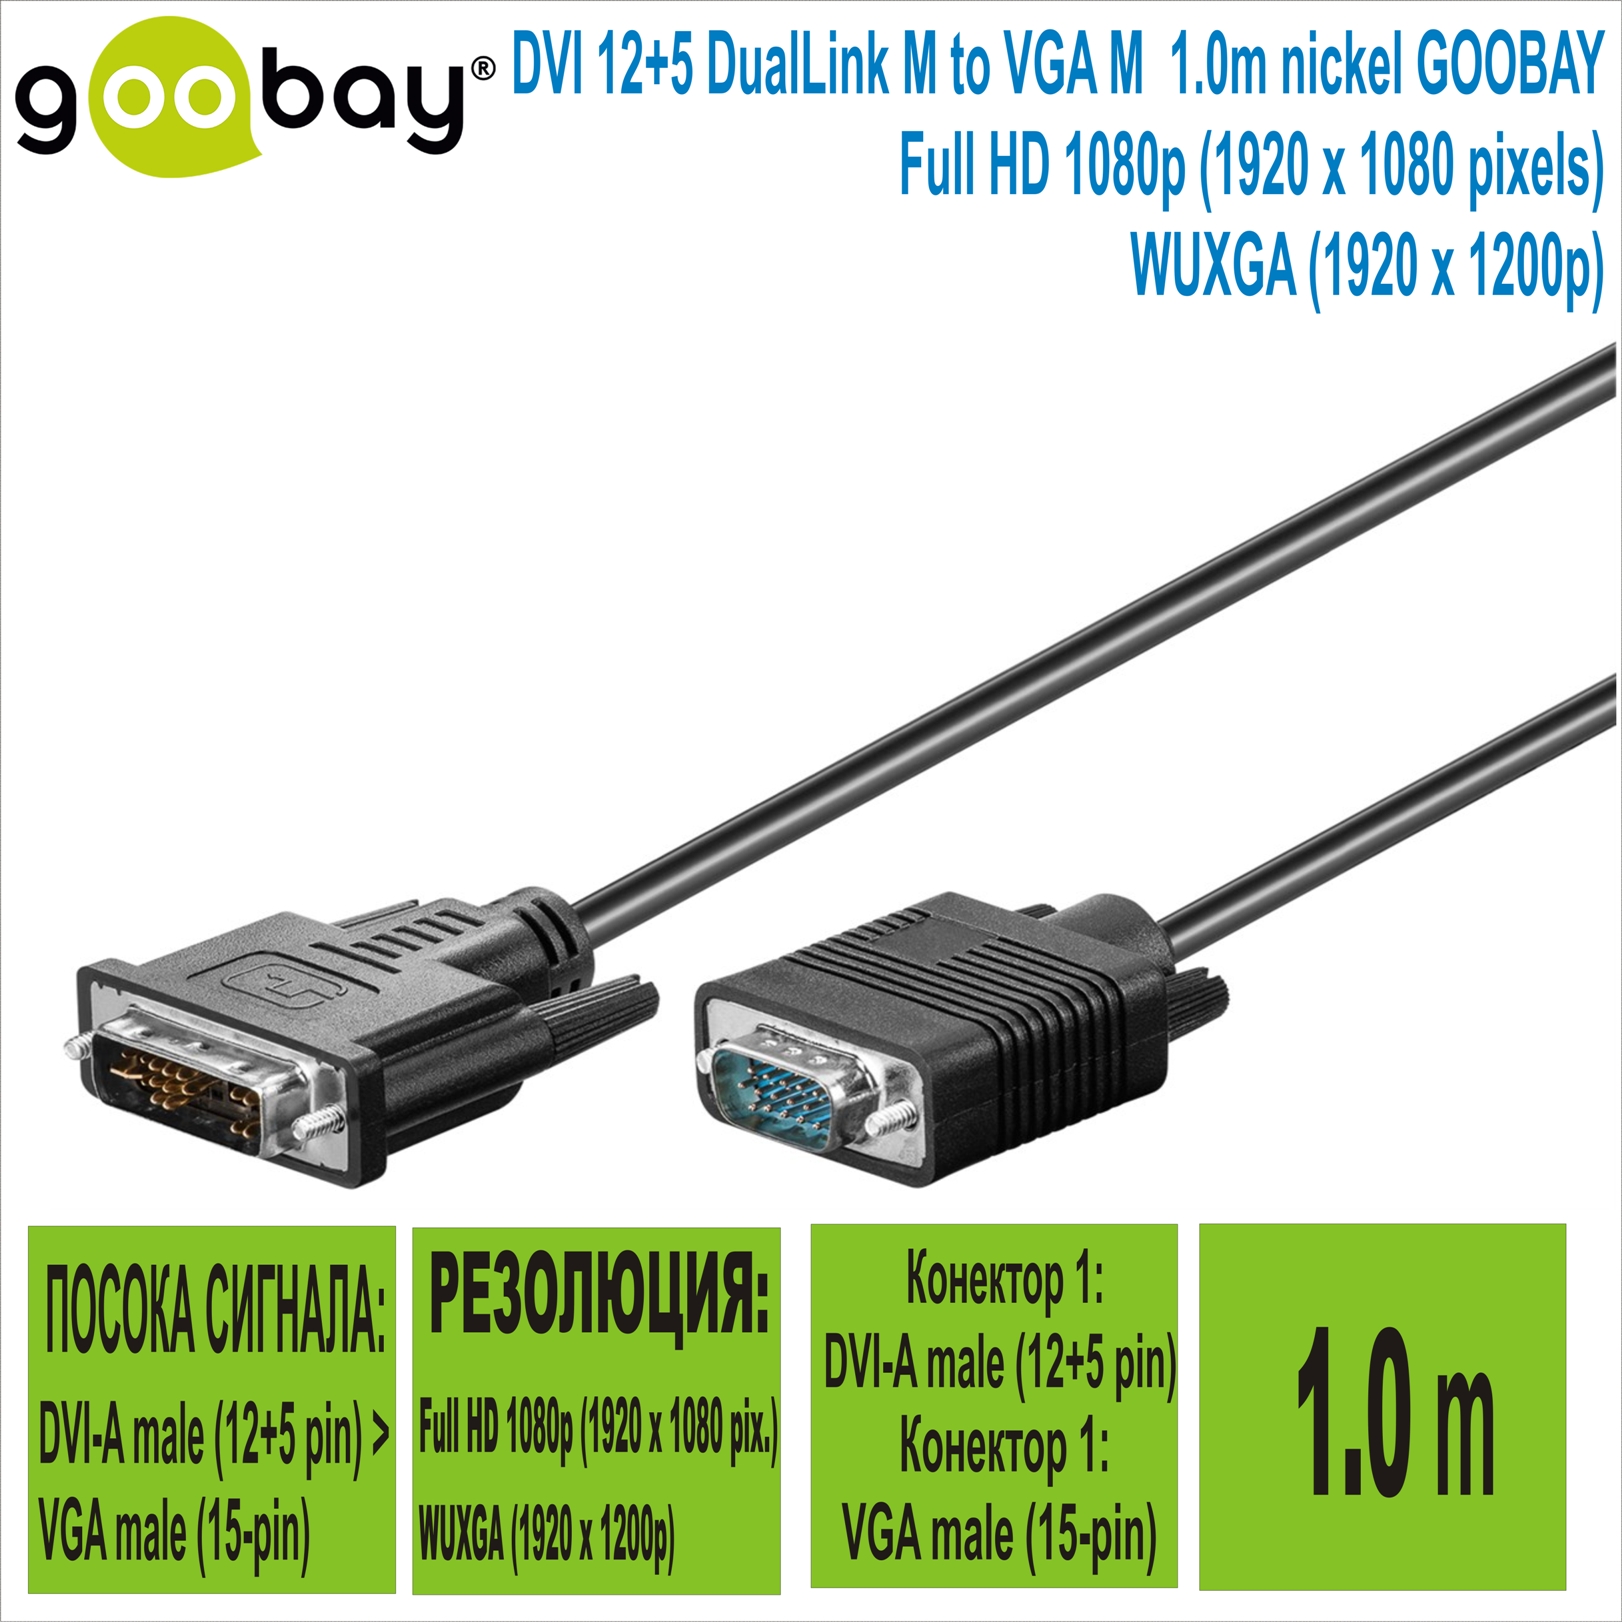 DVI 12+5 DualLink M to VGA M  1.0m nickel GOOBAY